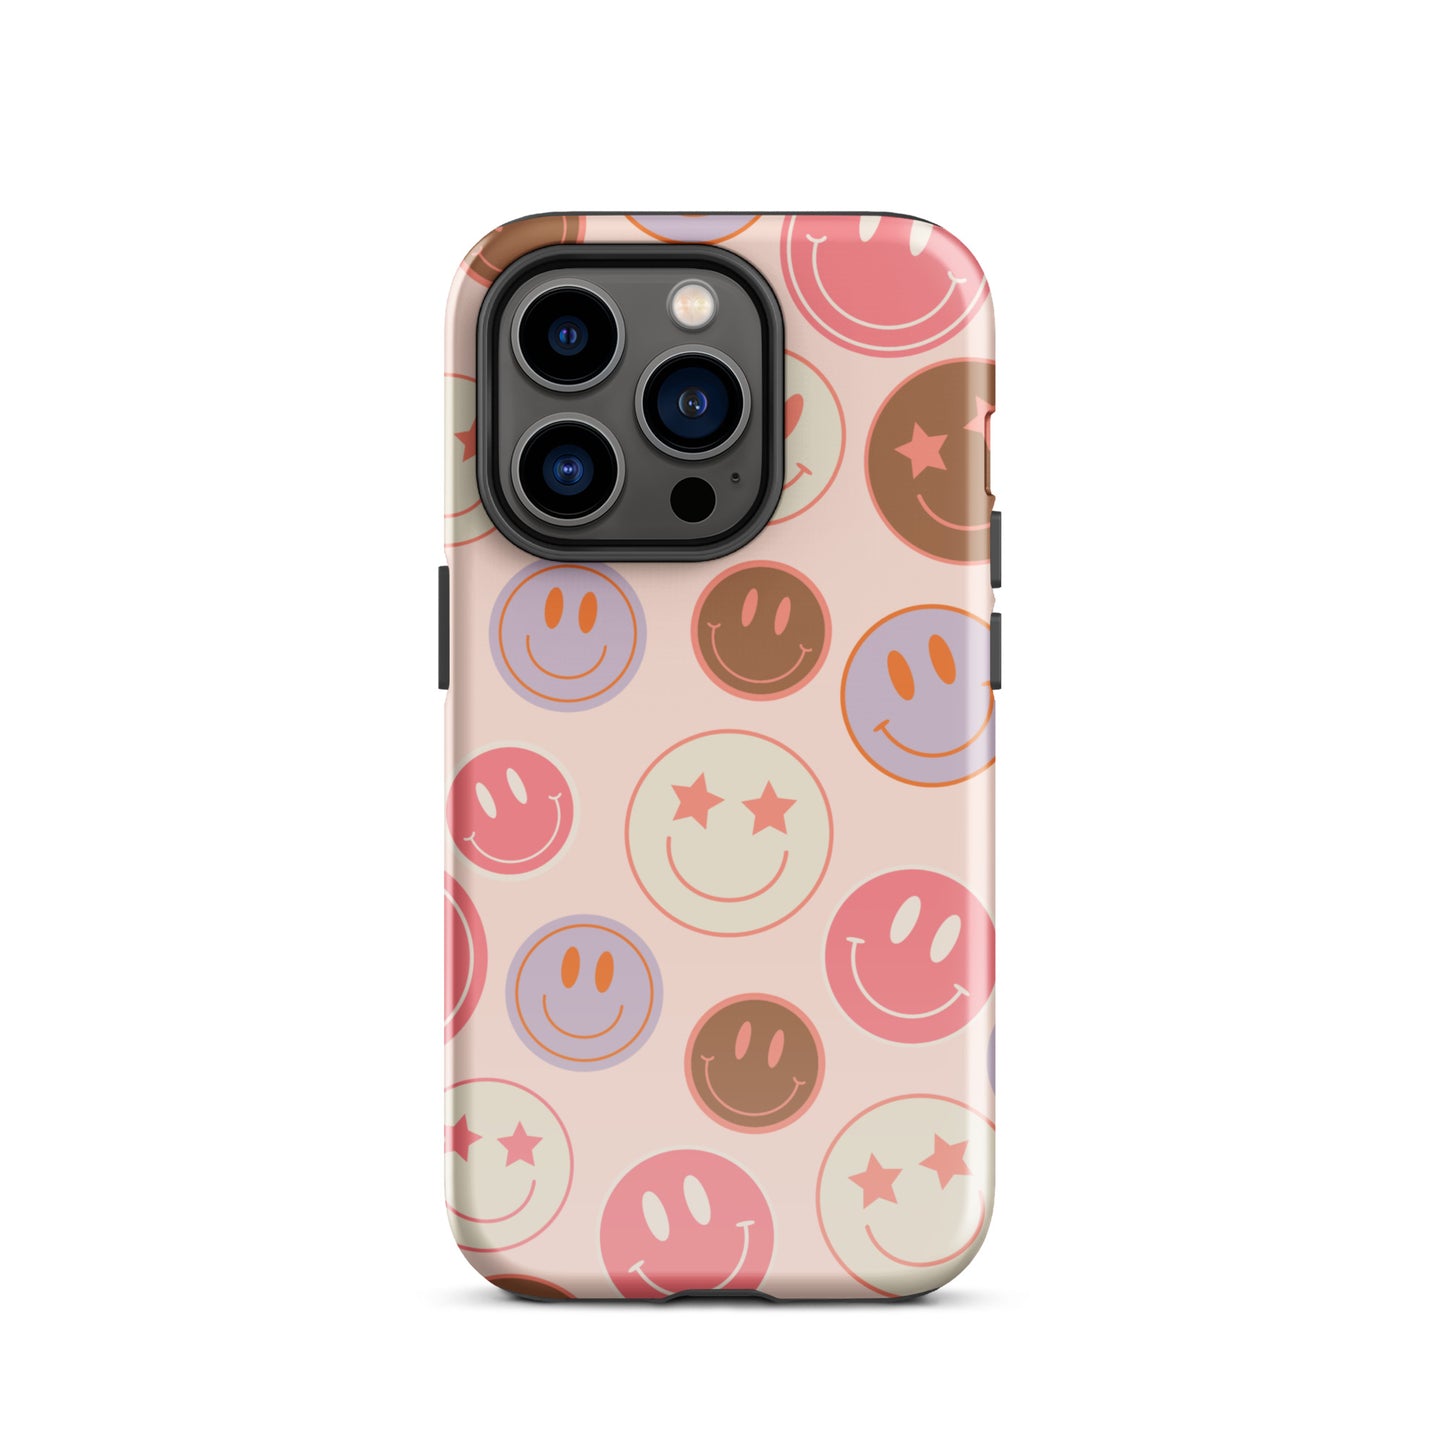 Preppy Pink Smiley Faces iPhone Case